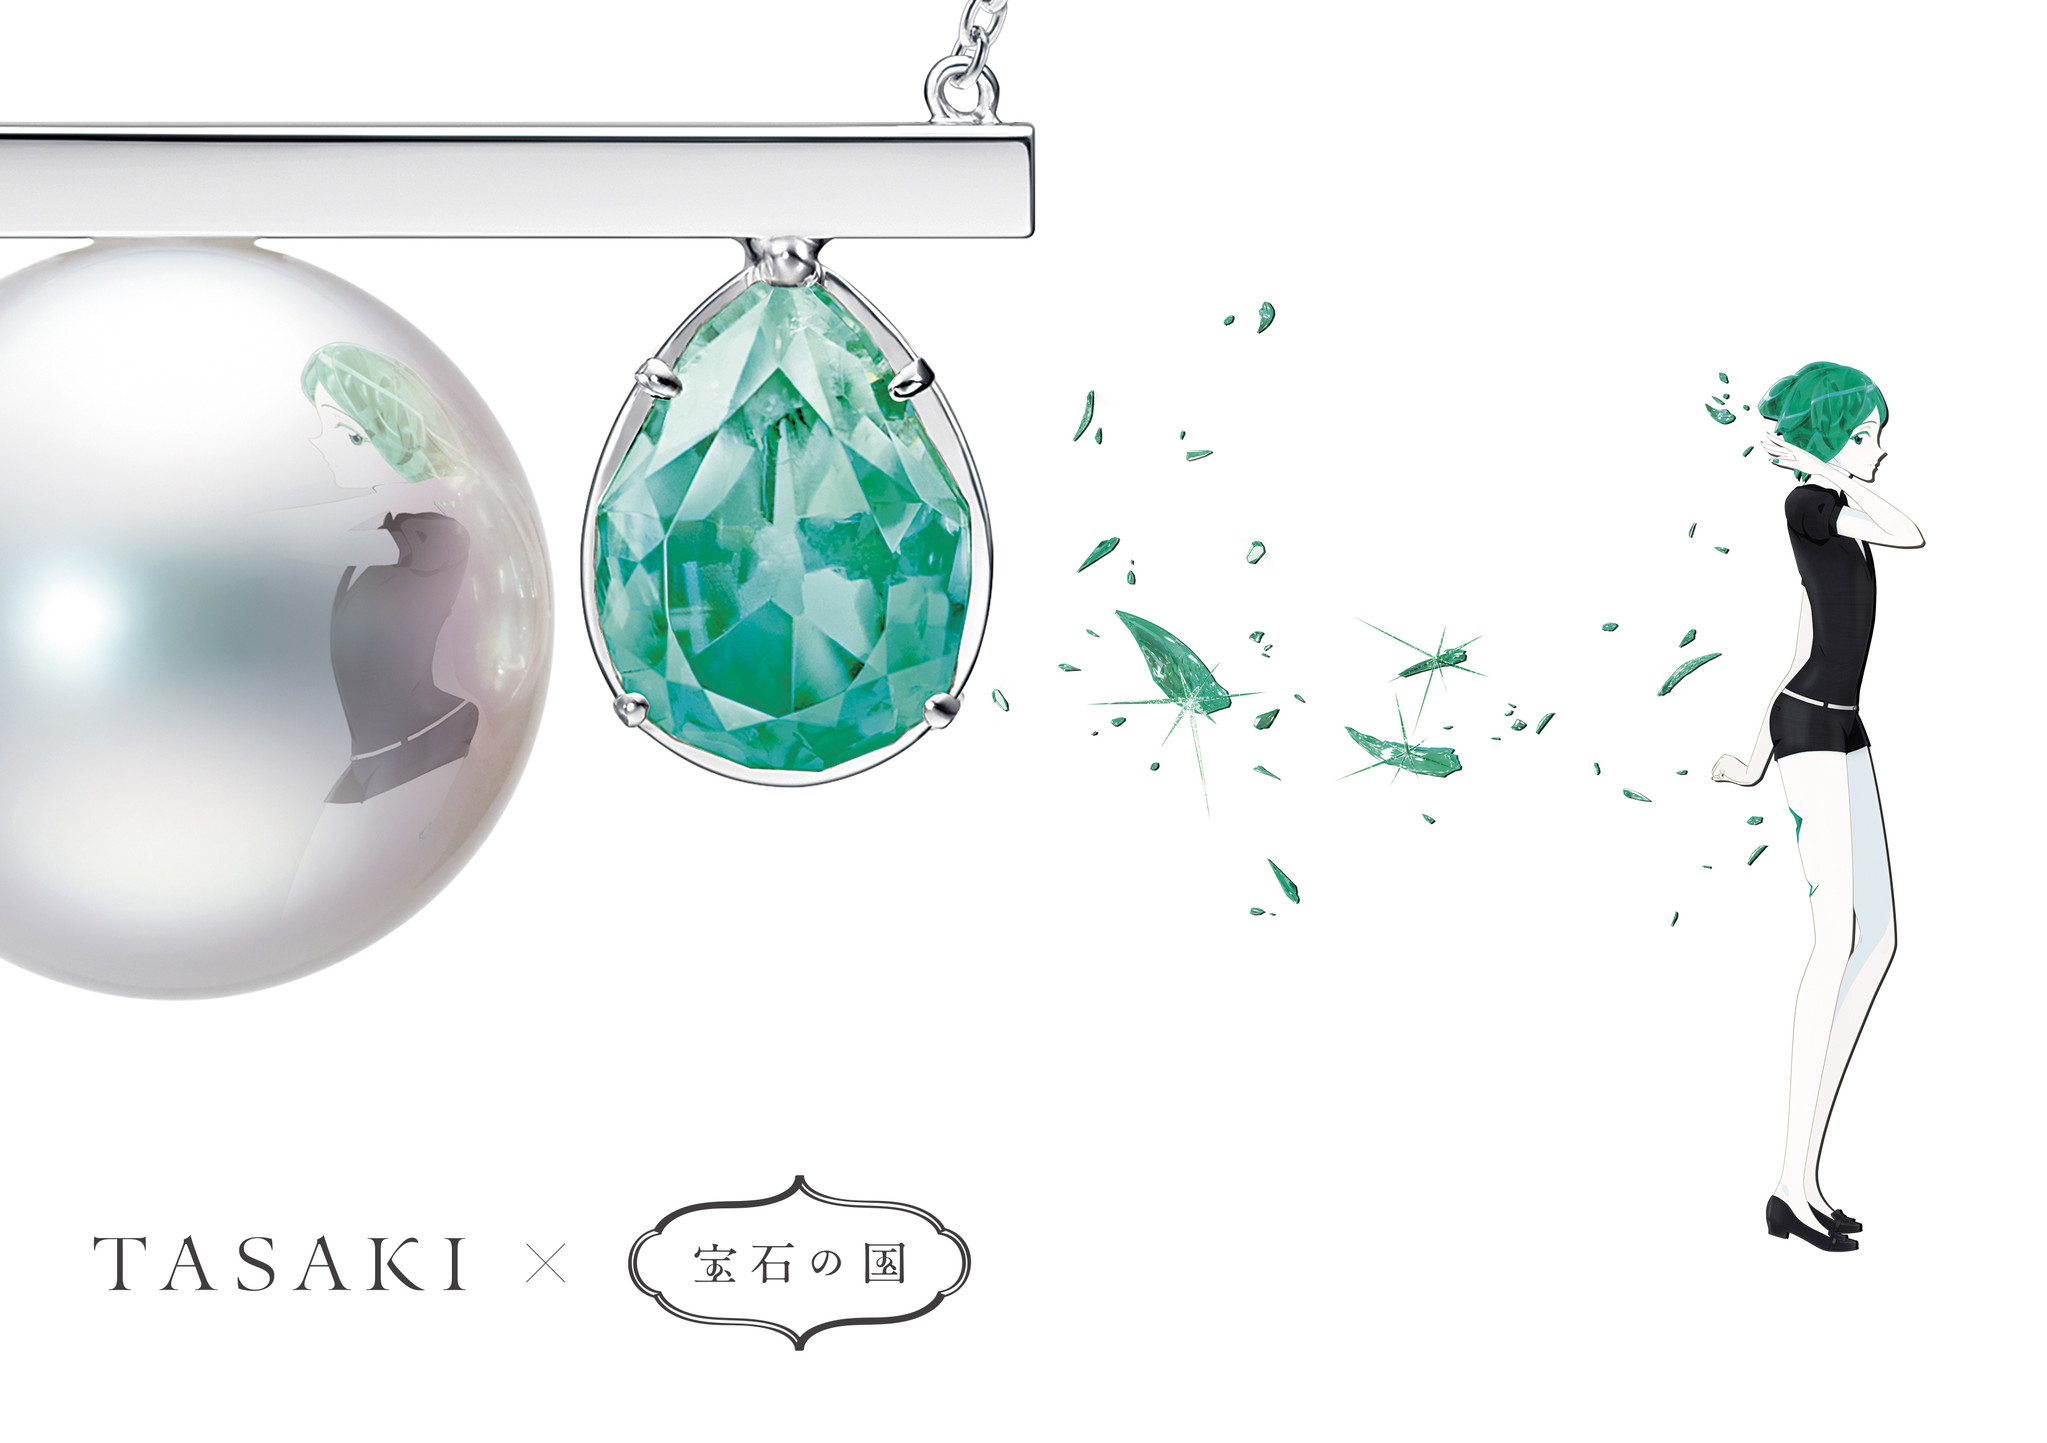 Tasaki 宝石の国 ジュエリーコレクション発売記念イベント 株式会社tasakiのプレスリリース